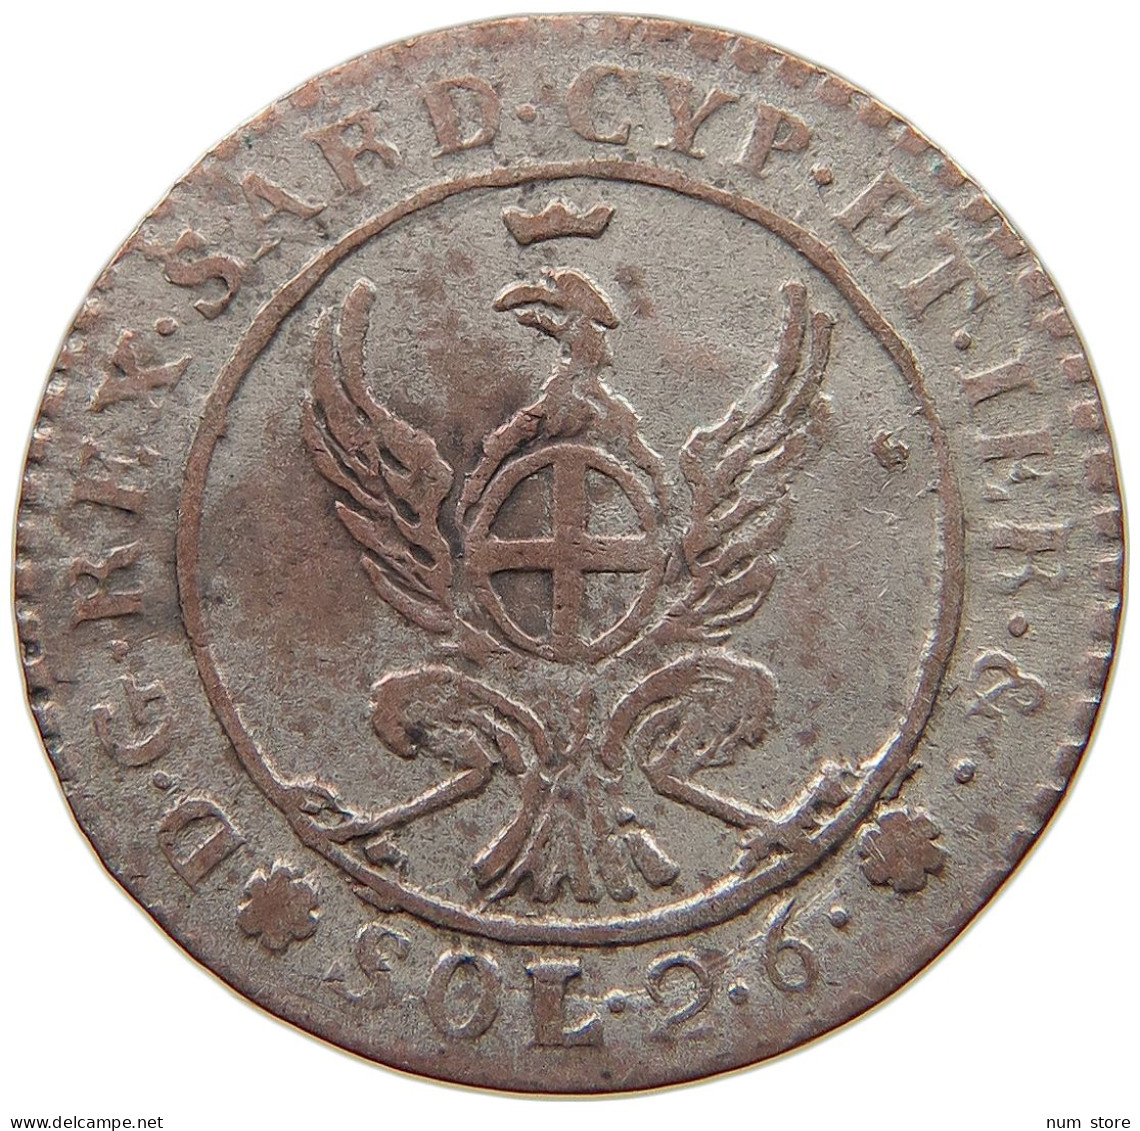 ITALY STATES SARDINIA 2.6 SOLDI 1815  #t107 0429 - Piemonte-Sardegna, Savoia Italiana